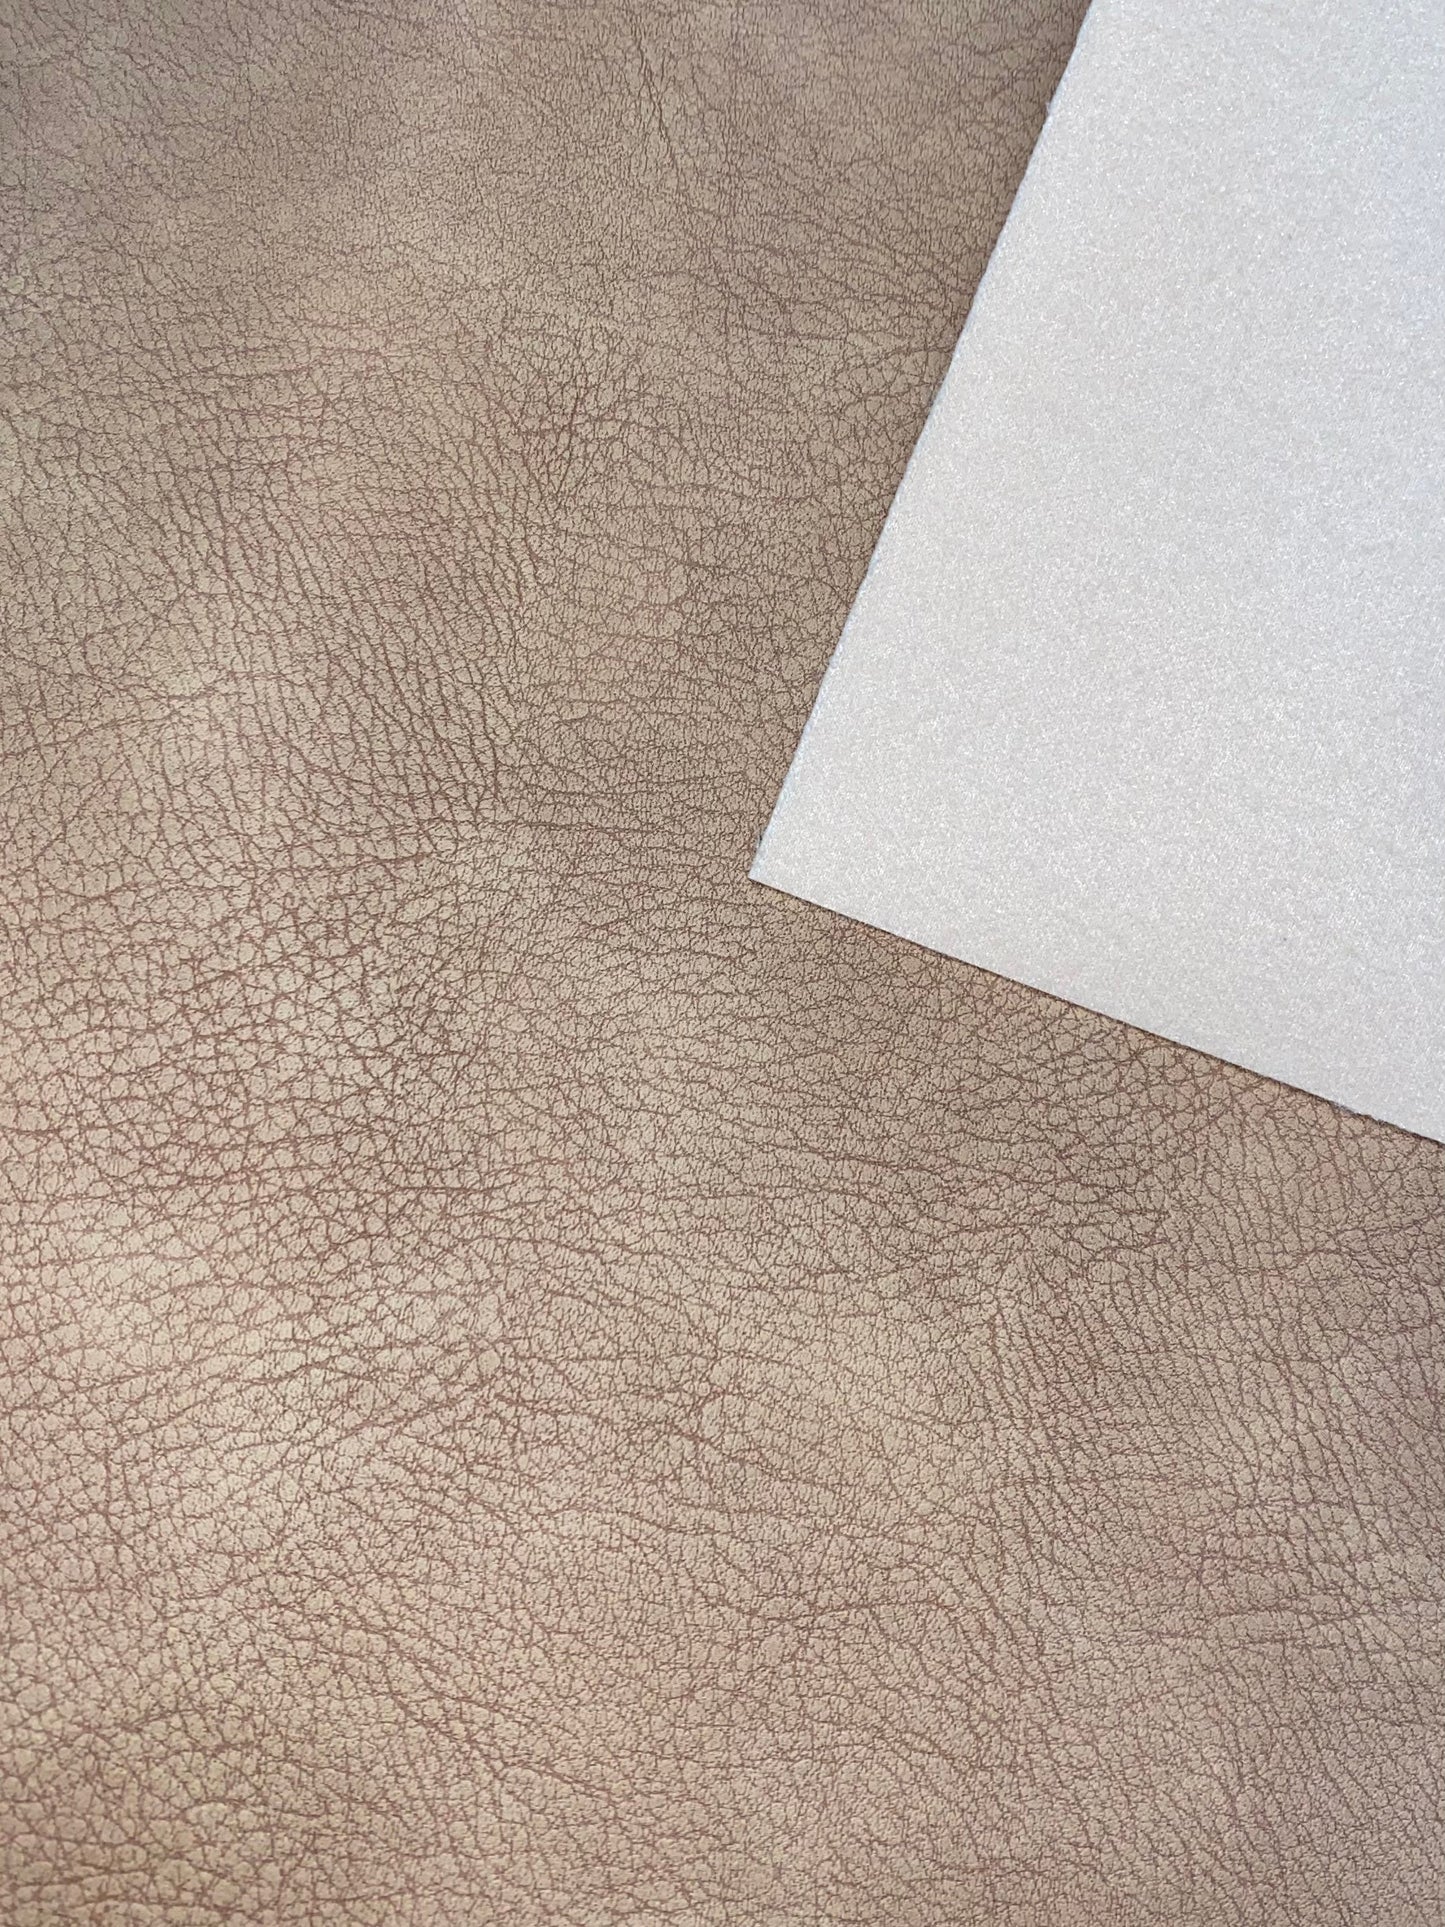 RETAIL Pig Skin Suede Vegan Leather .6mm soft back